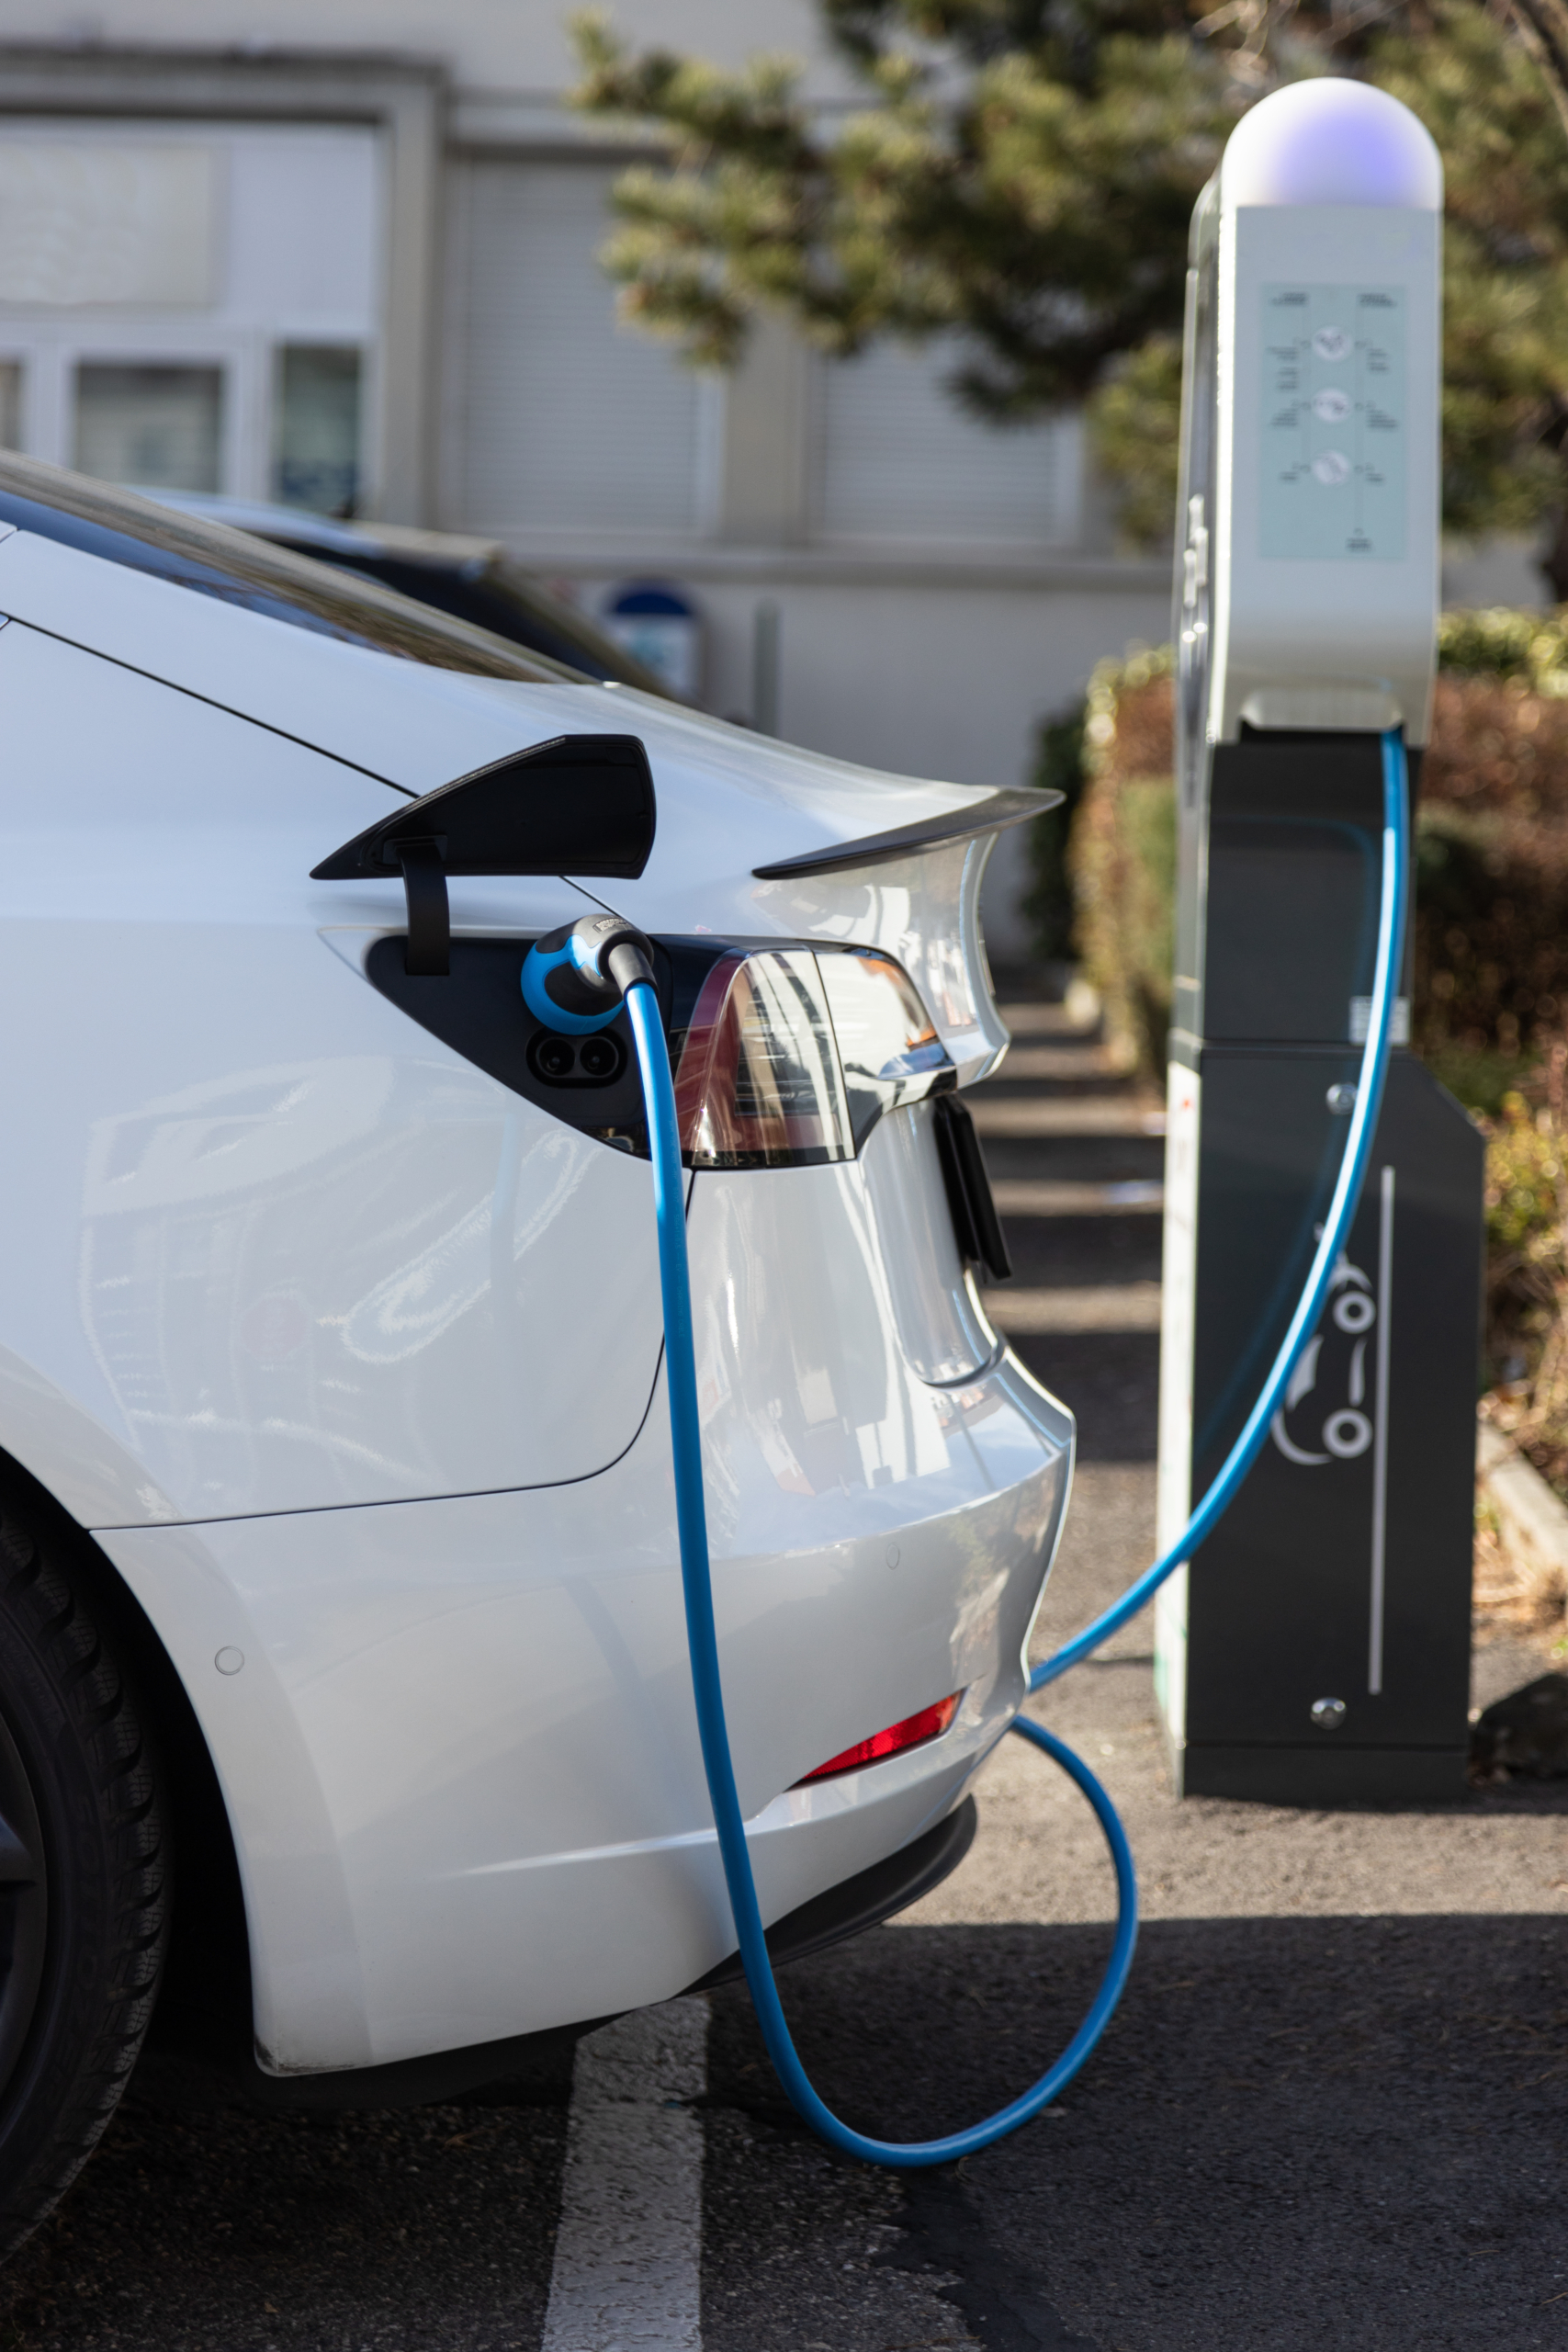 OEM and Electric Vehicle Partnerships